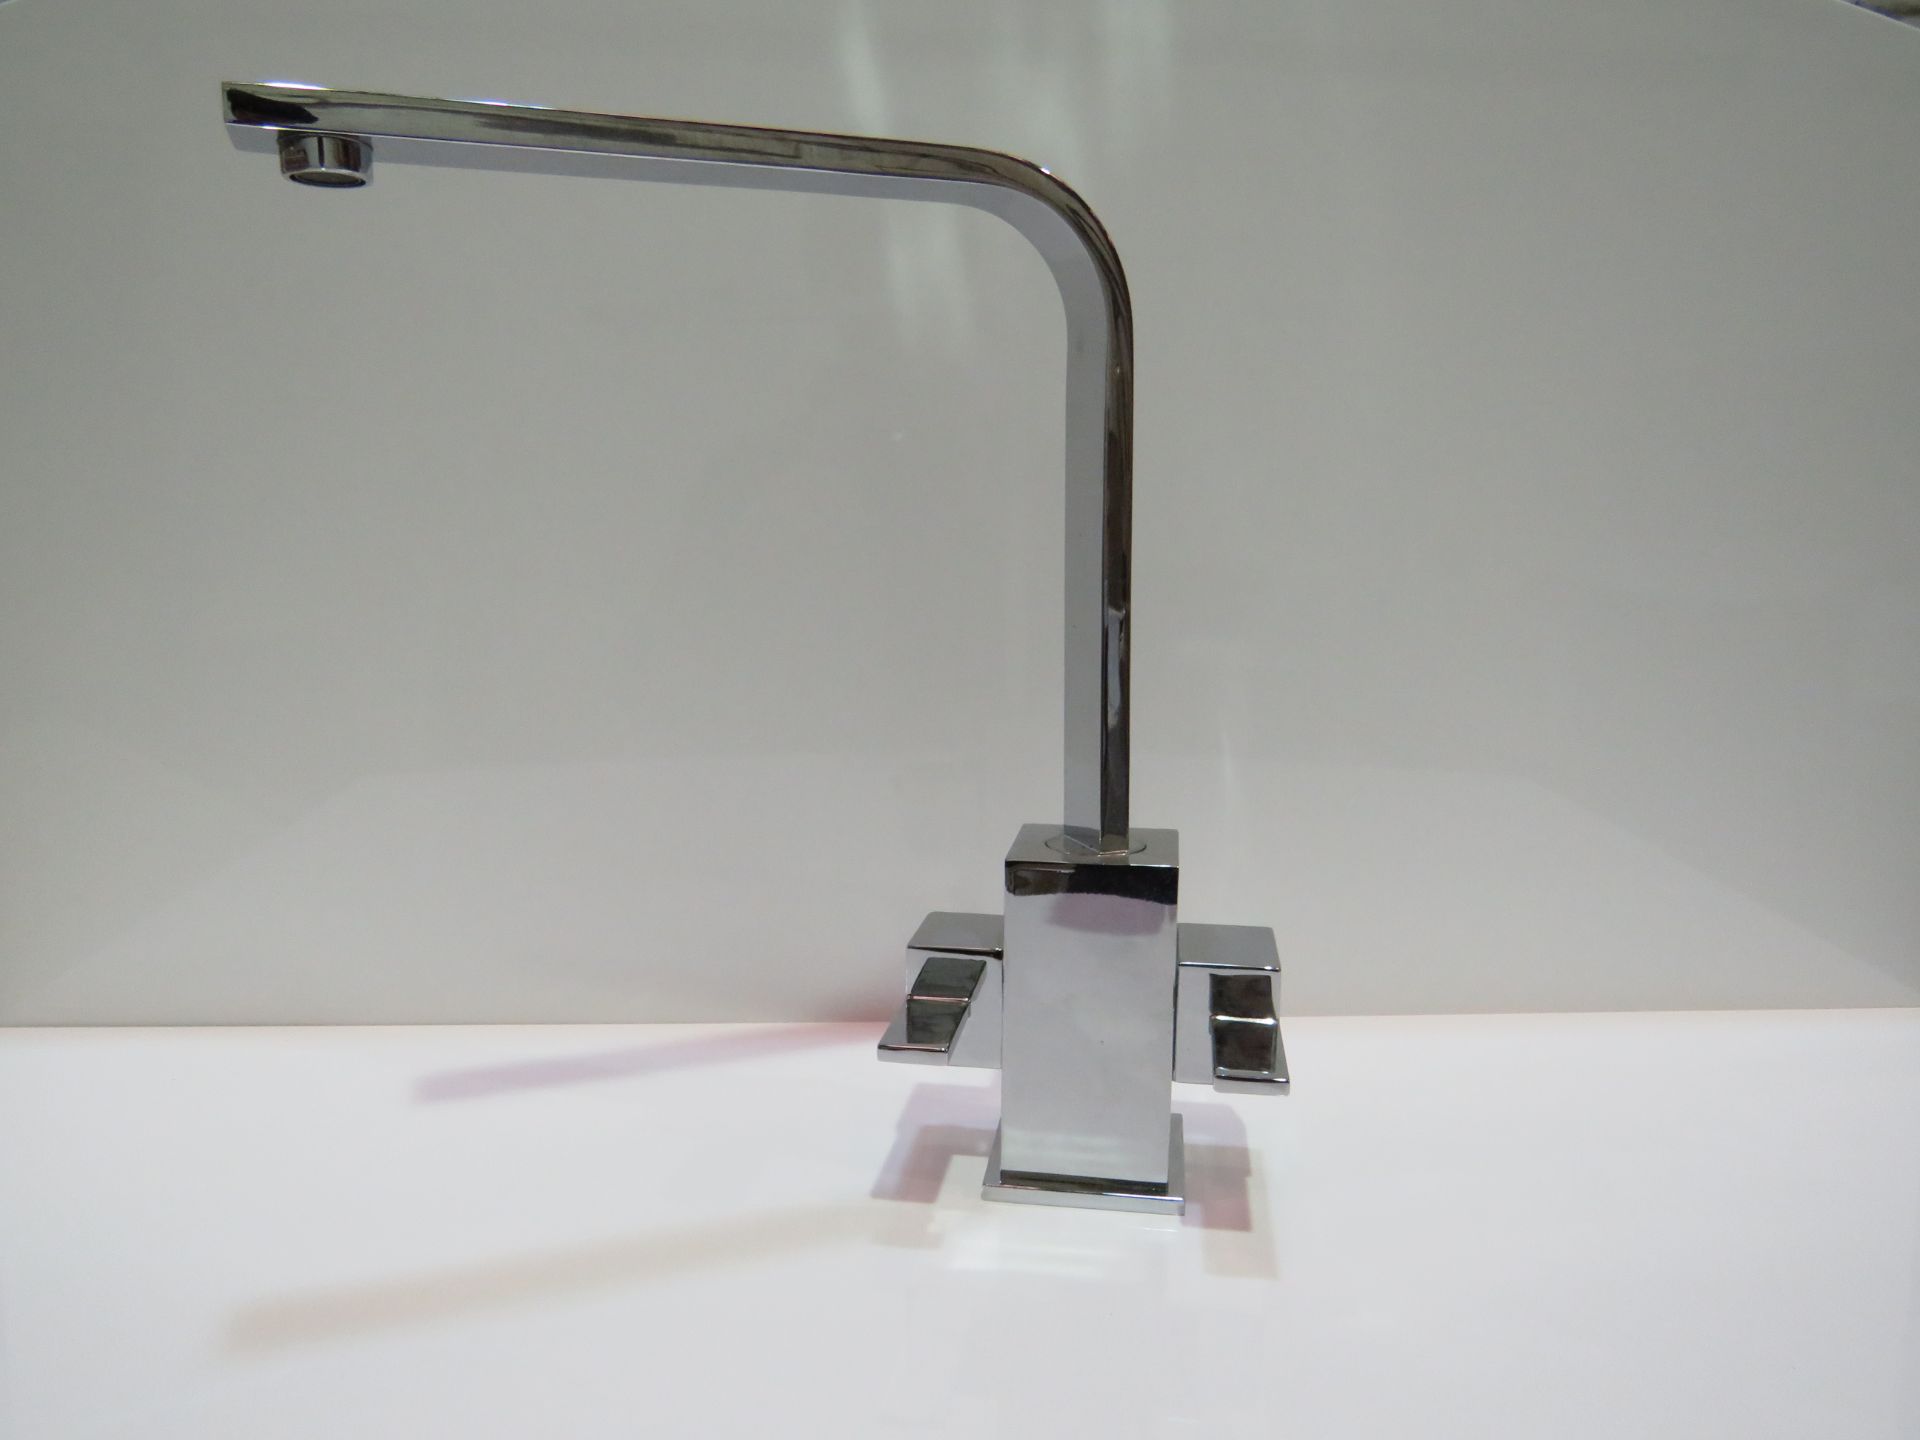 KTA Dual Lever Mono Kitchen Sink Mixer Tap - Chrome - New & Boxed. - Image 2 of 2